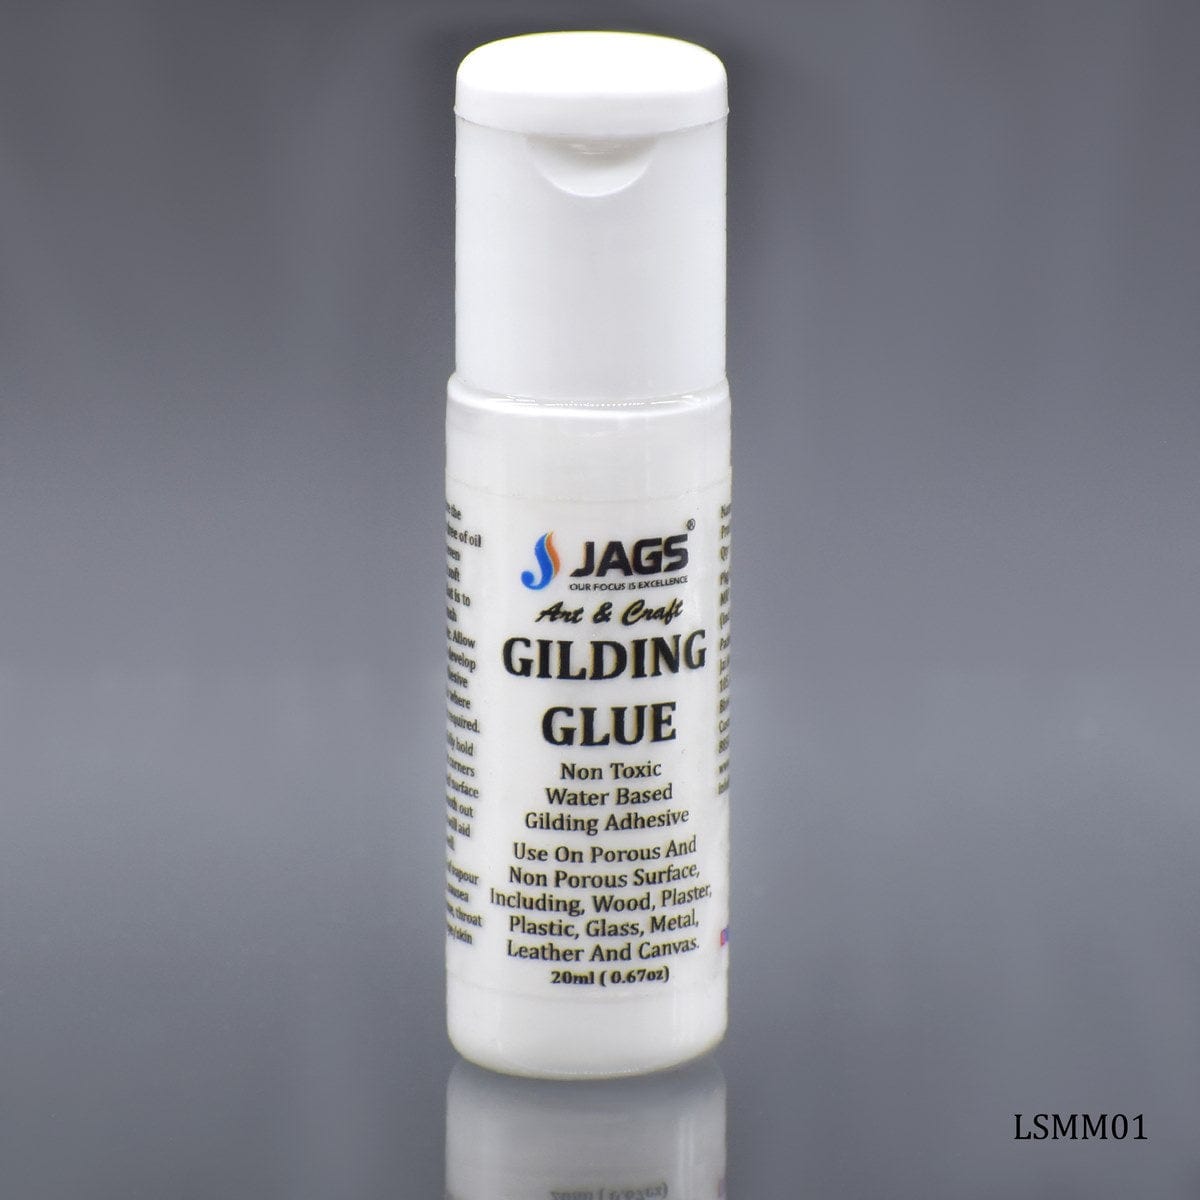 jags-mumbai Glue Leafing Gilding Glue Water Based 20ml